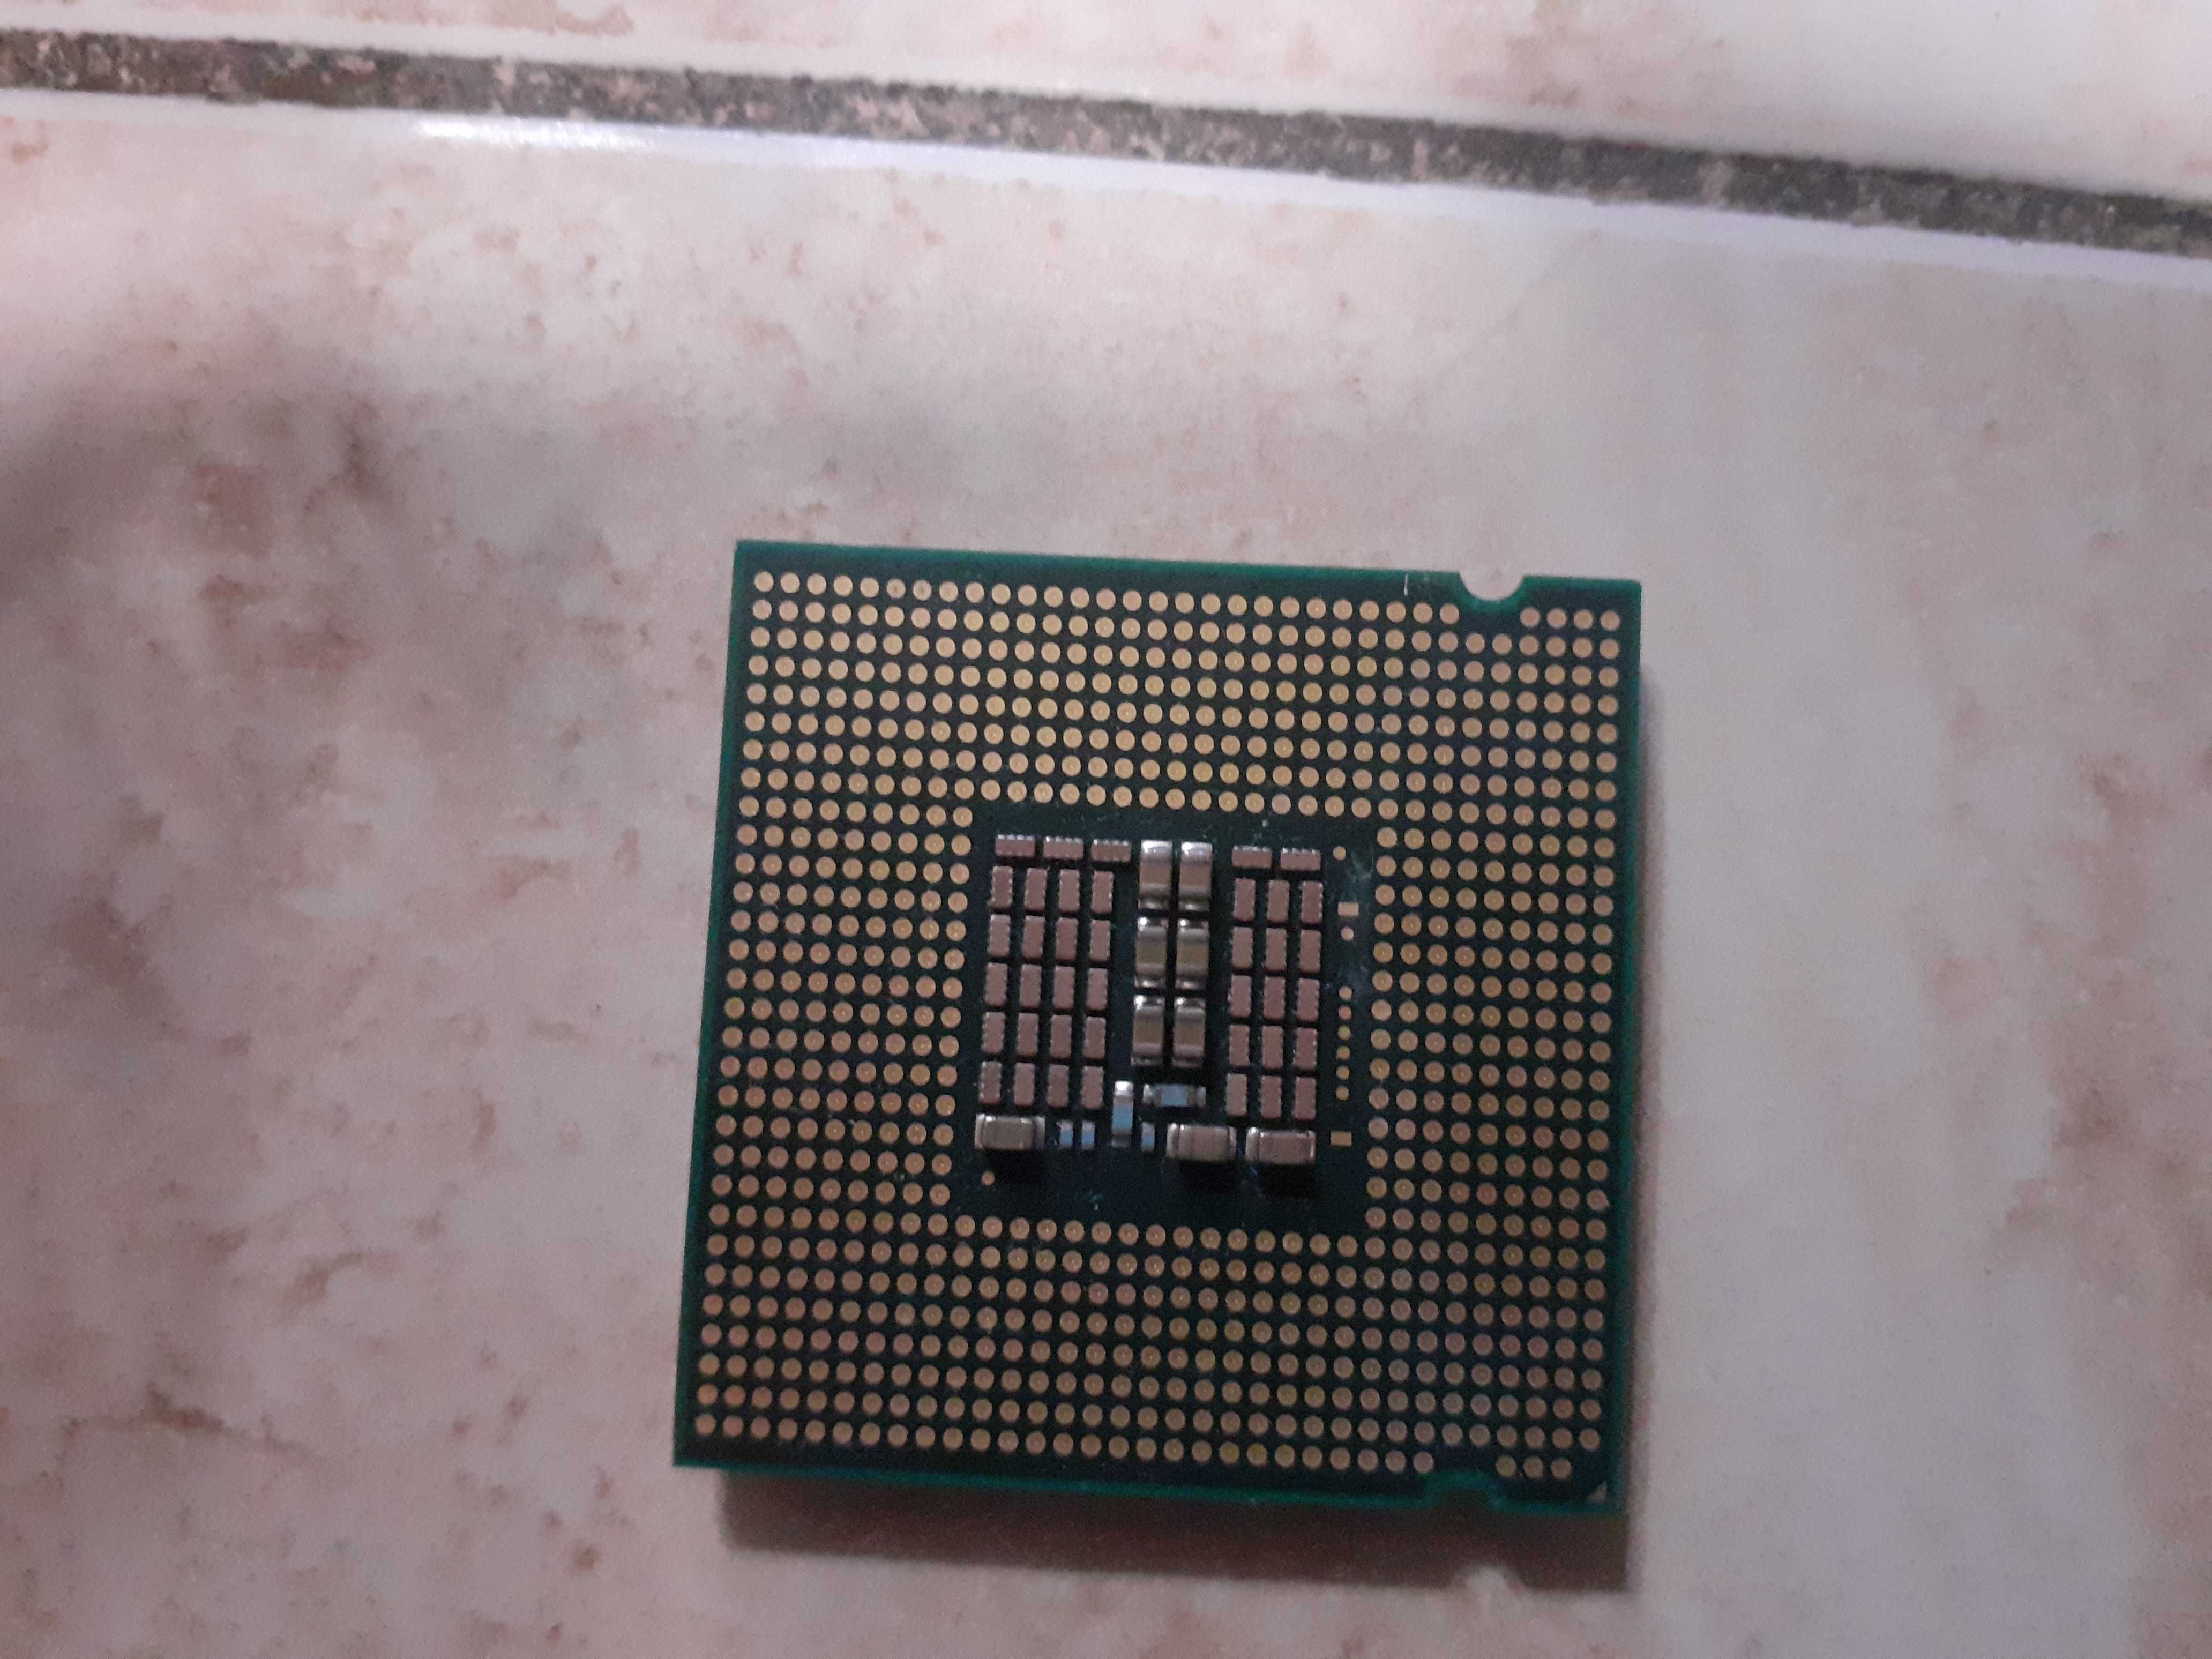 Procesor Intel Core 2 Quad Extreme QX9650 4 x 3 GHz